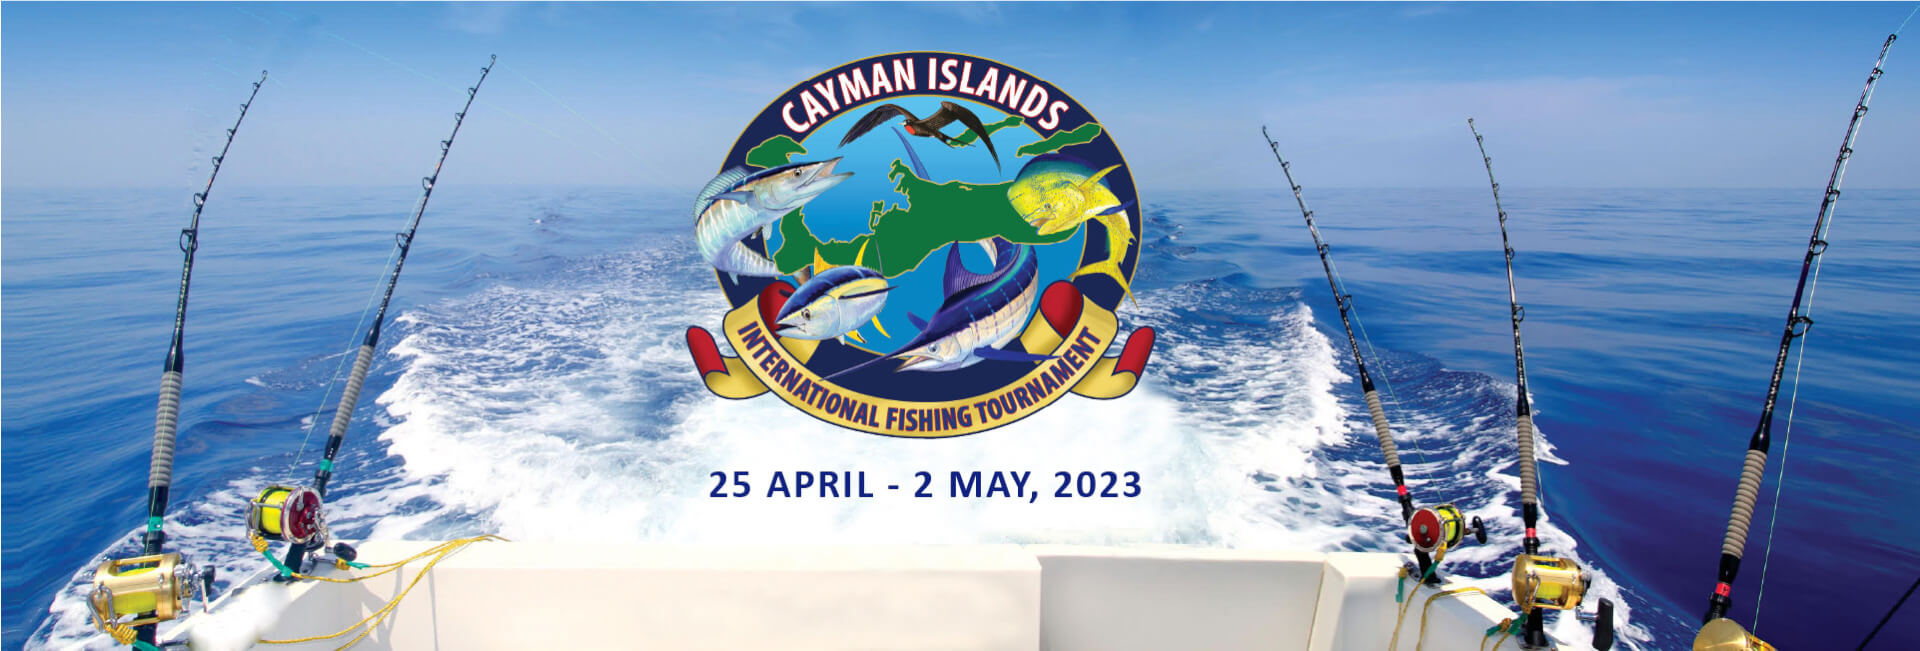 Cayman Islands International Fishing Tournament 2023 - Cayman Islands  Angling Club